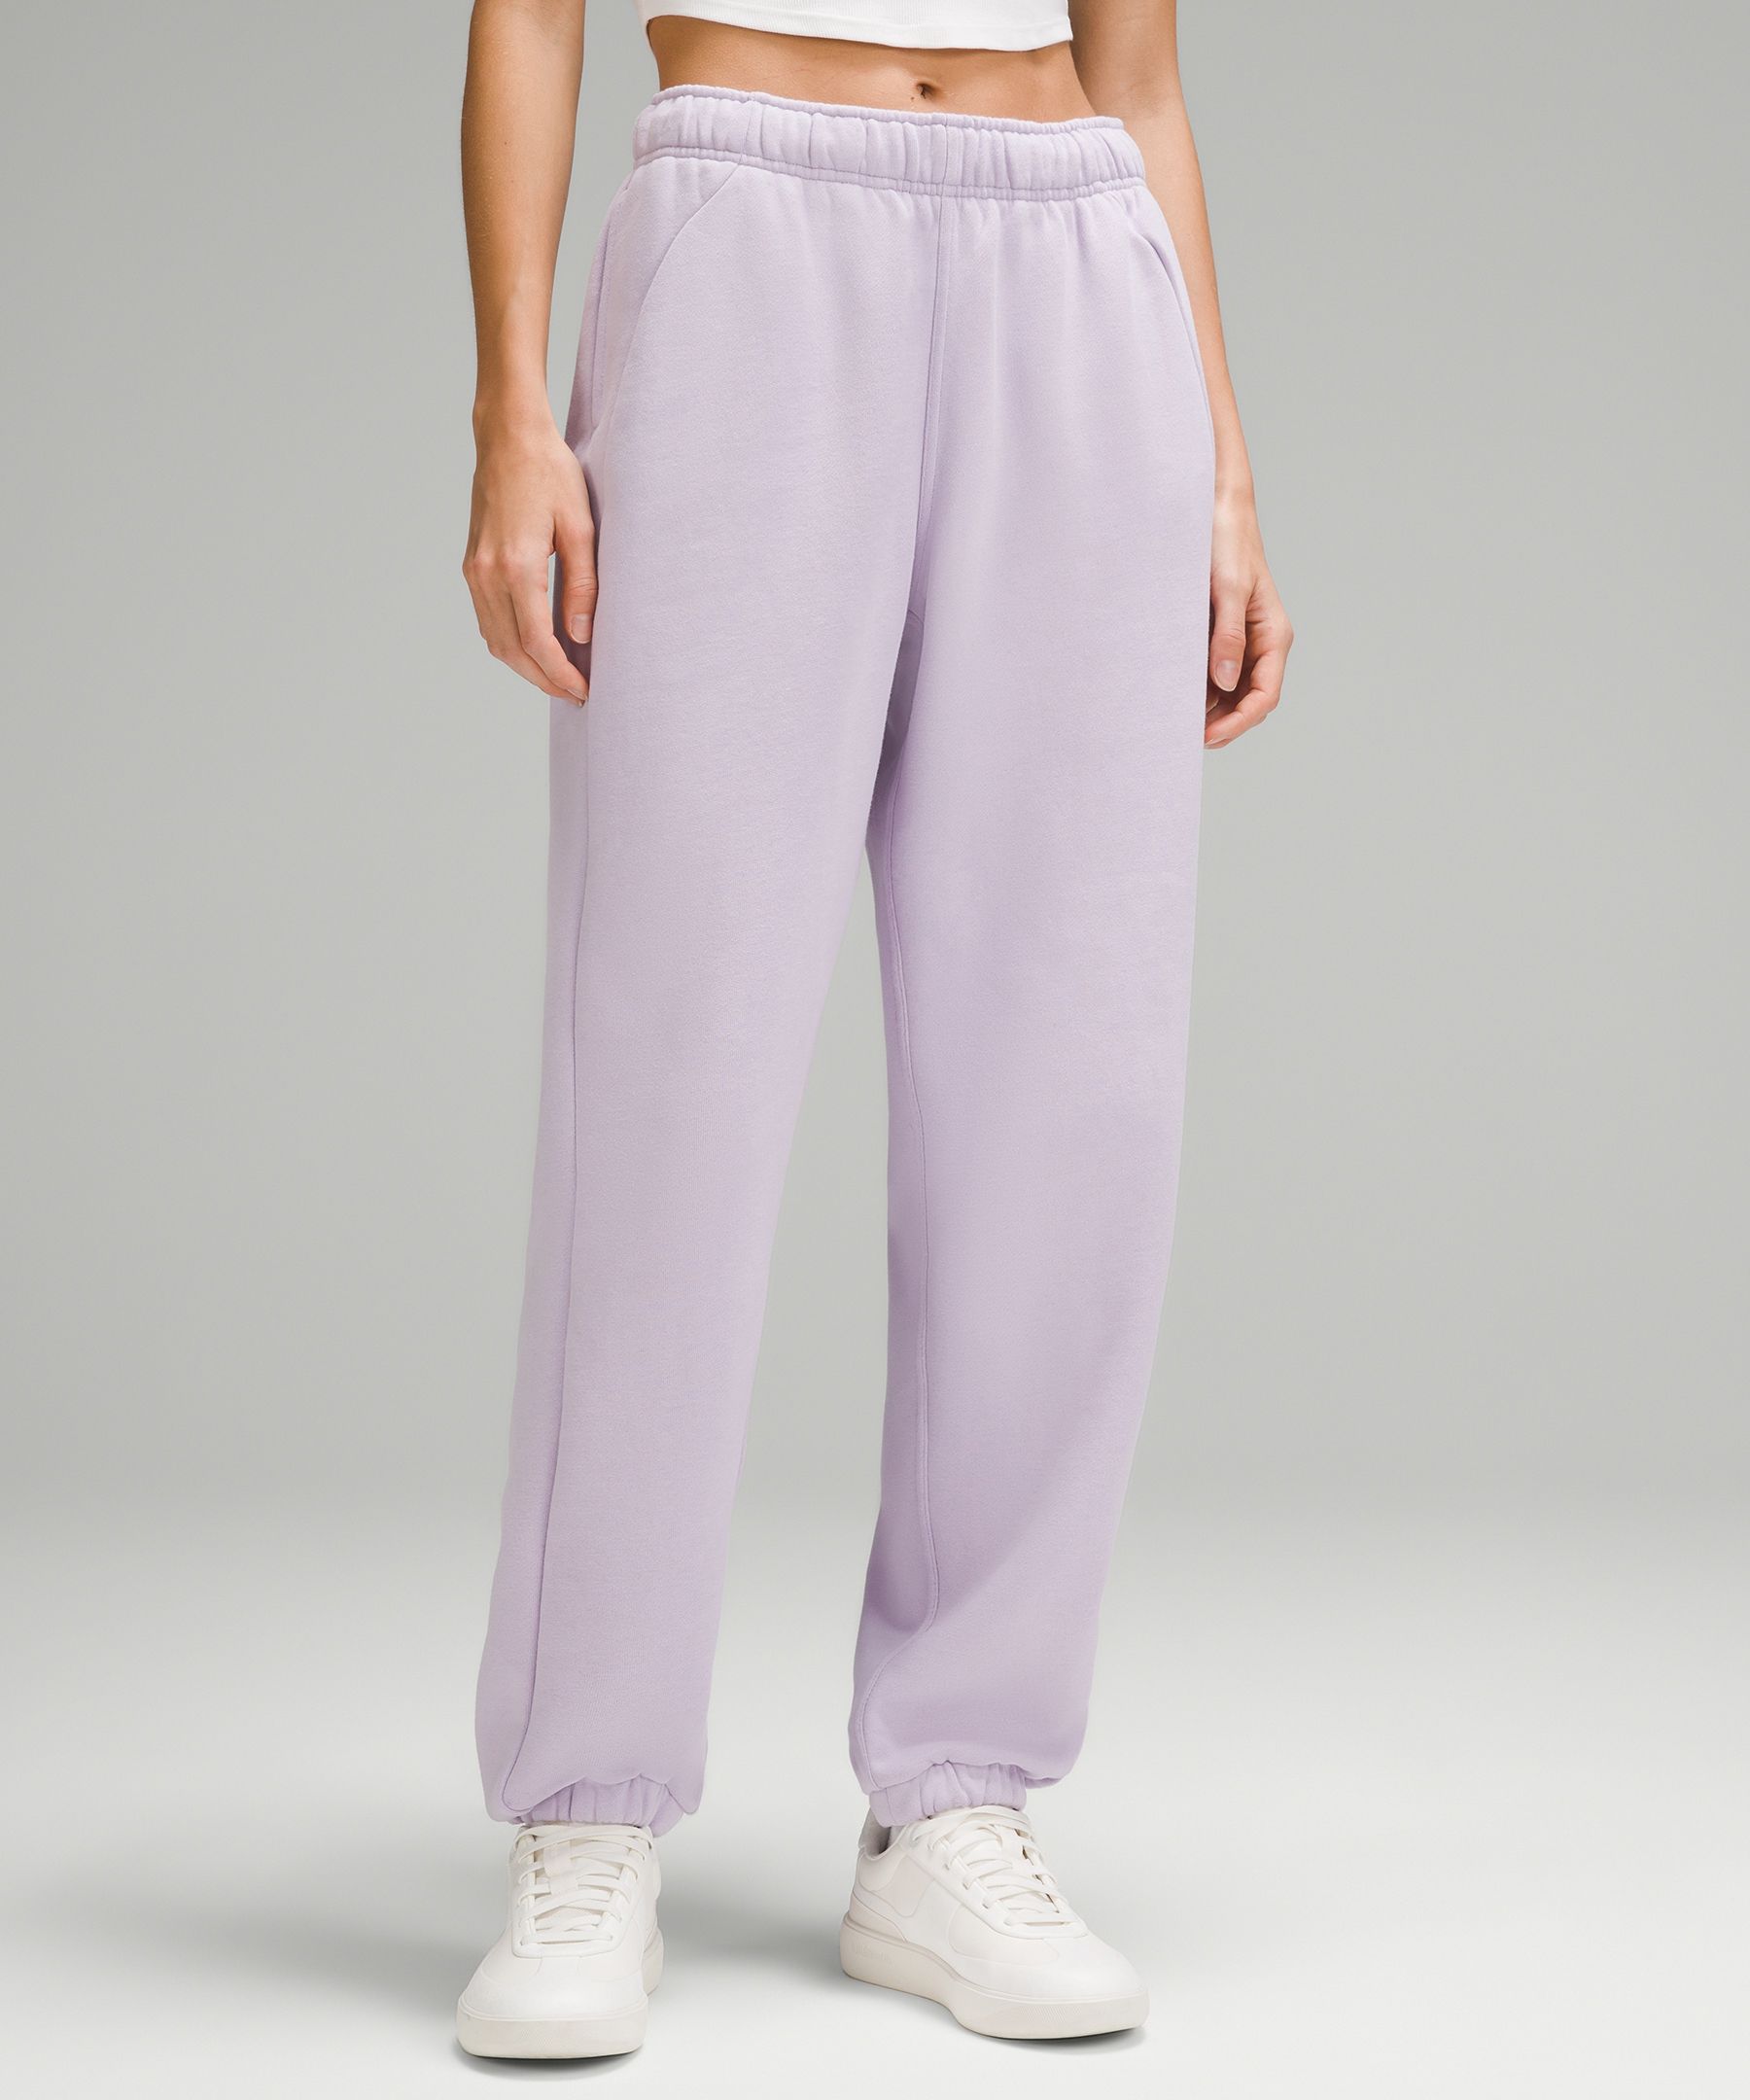 City Threads Girls Size 8 Purple Thermal Long Underwear Long Johns NWOT